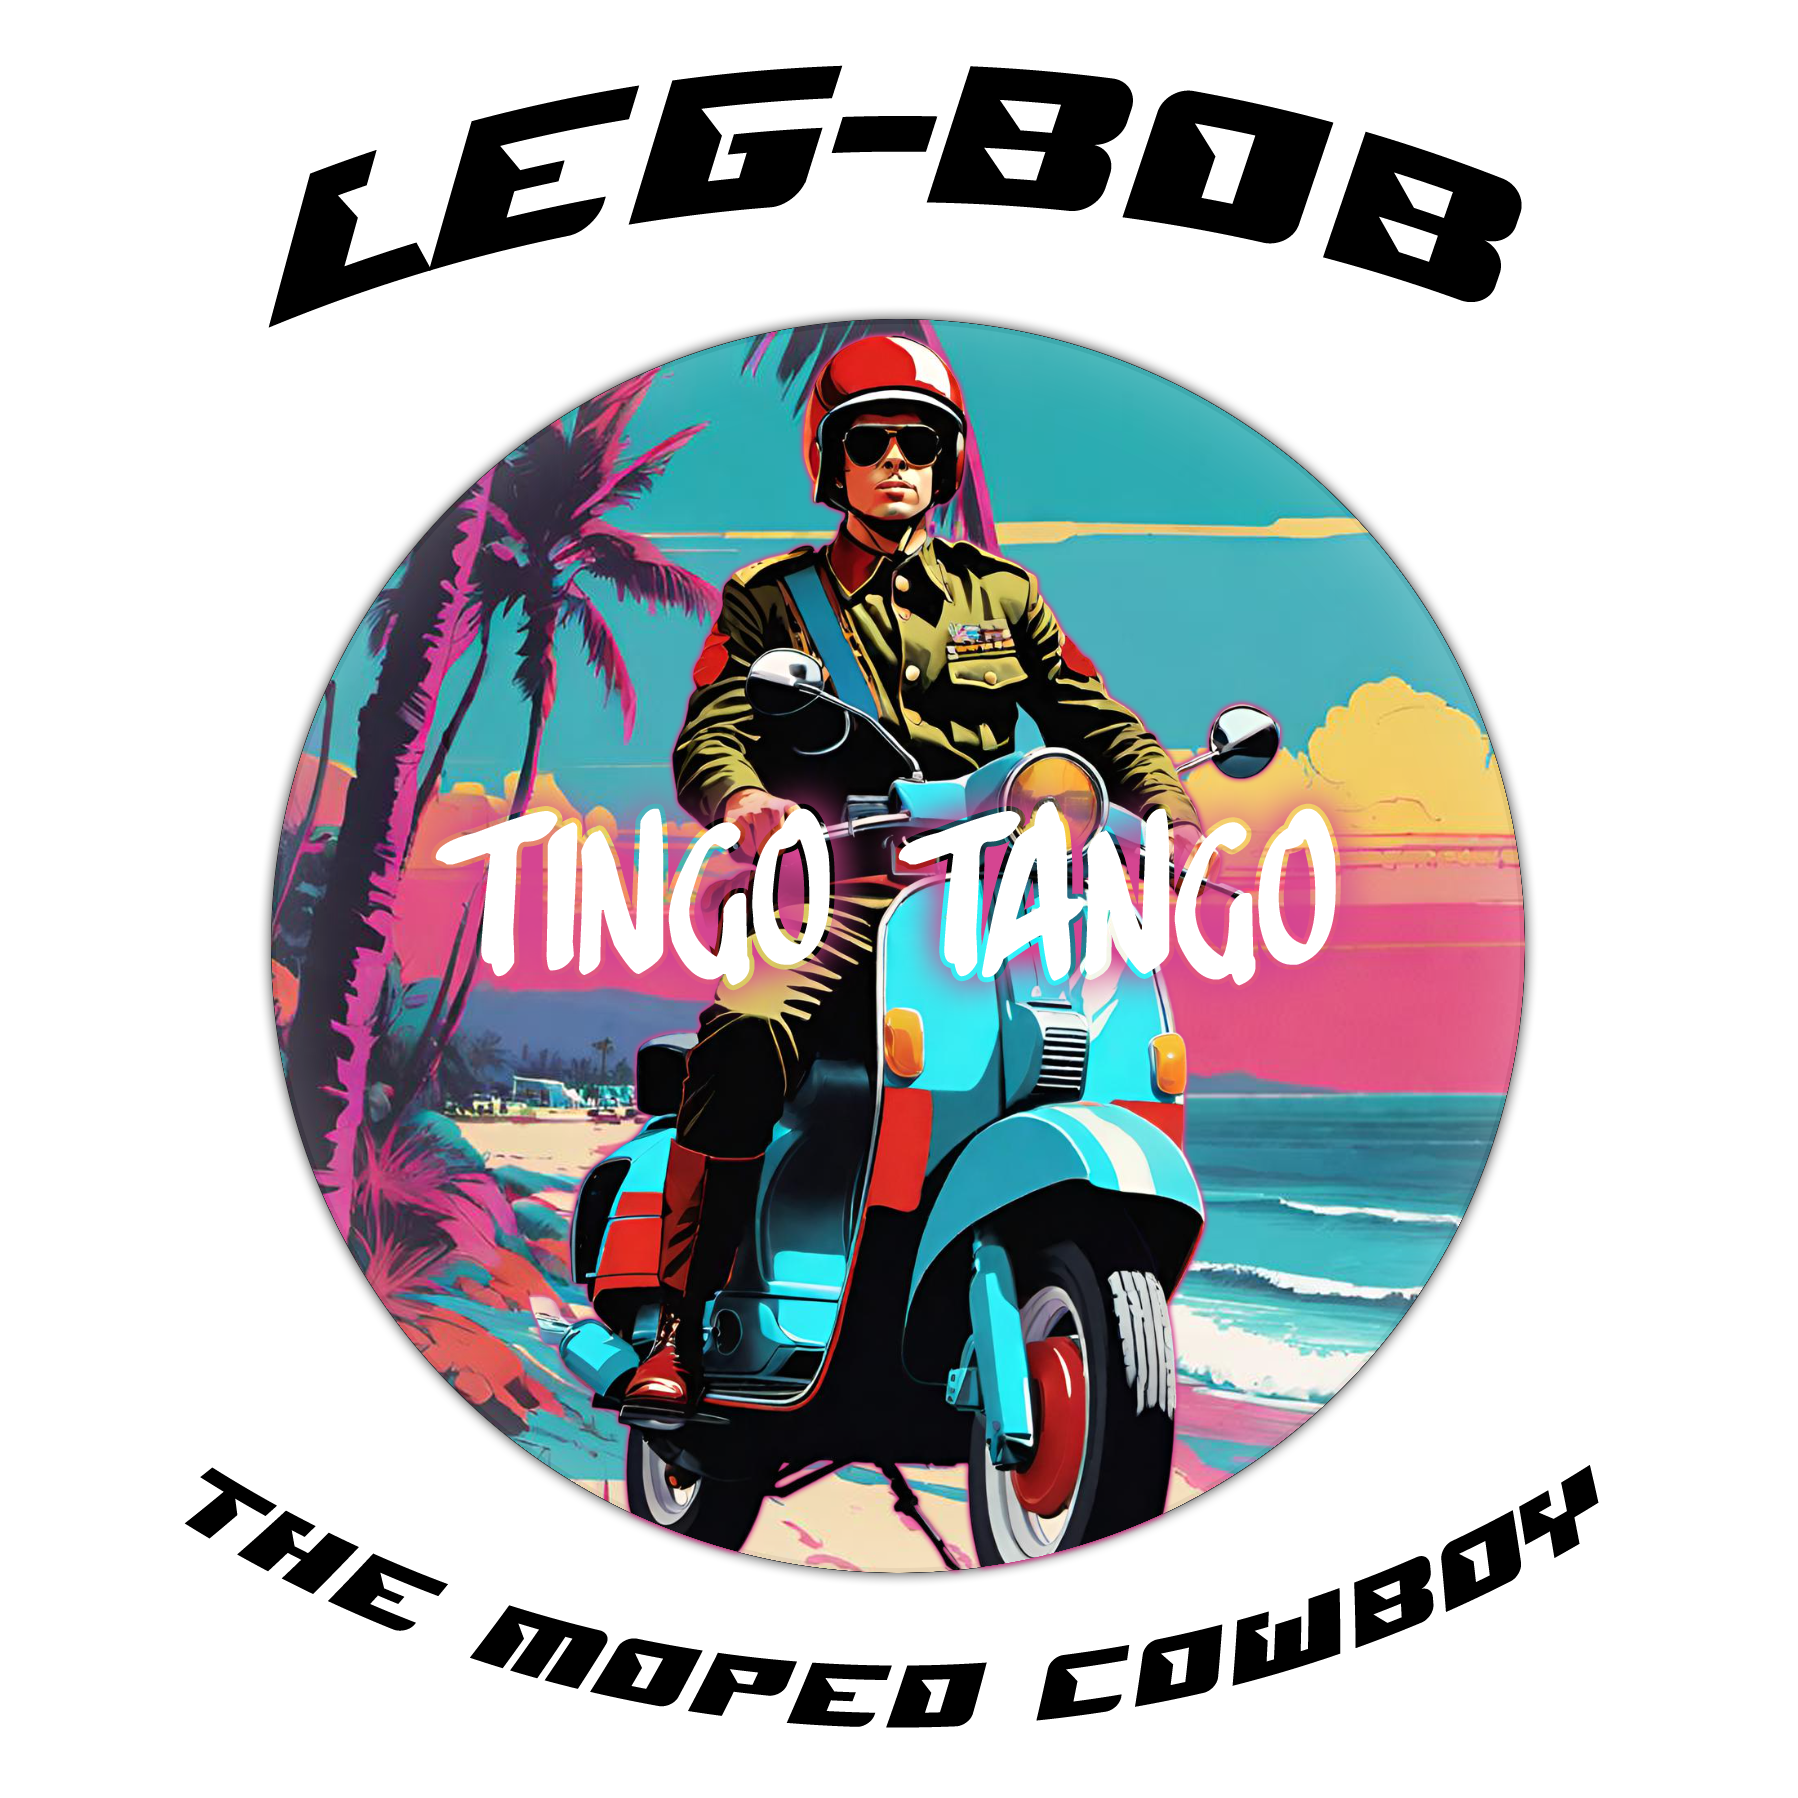 Leg Bob the Moped Cowboy Tingo Tango